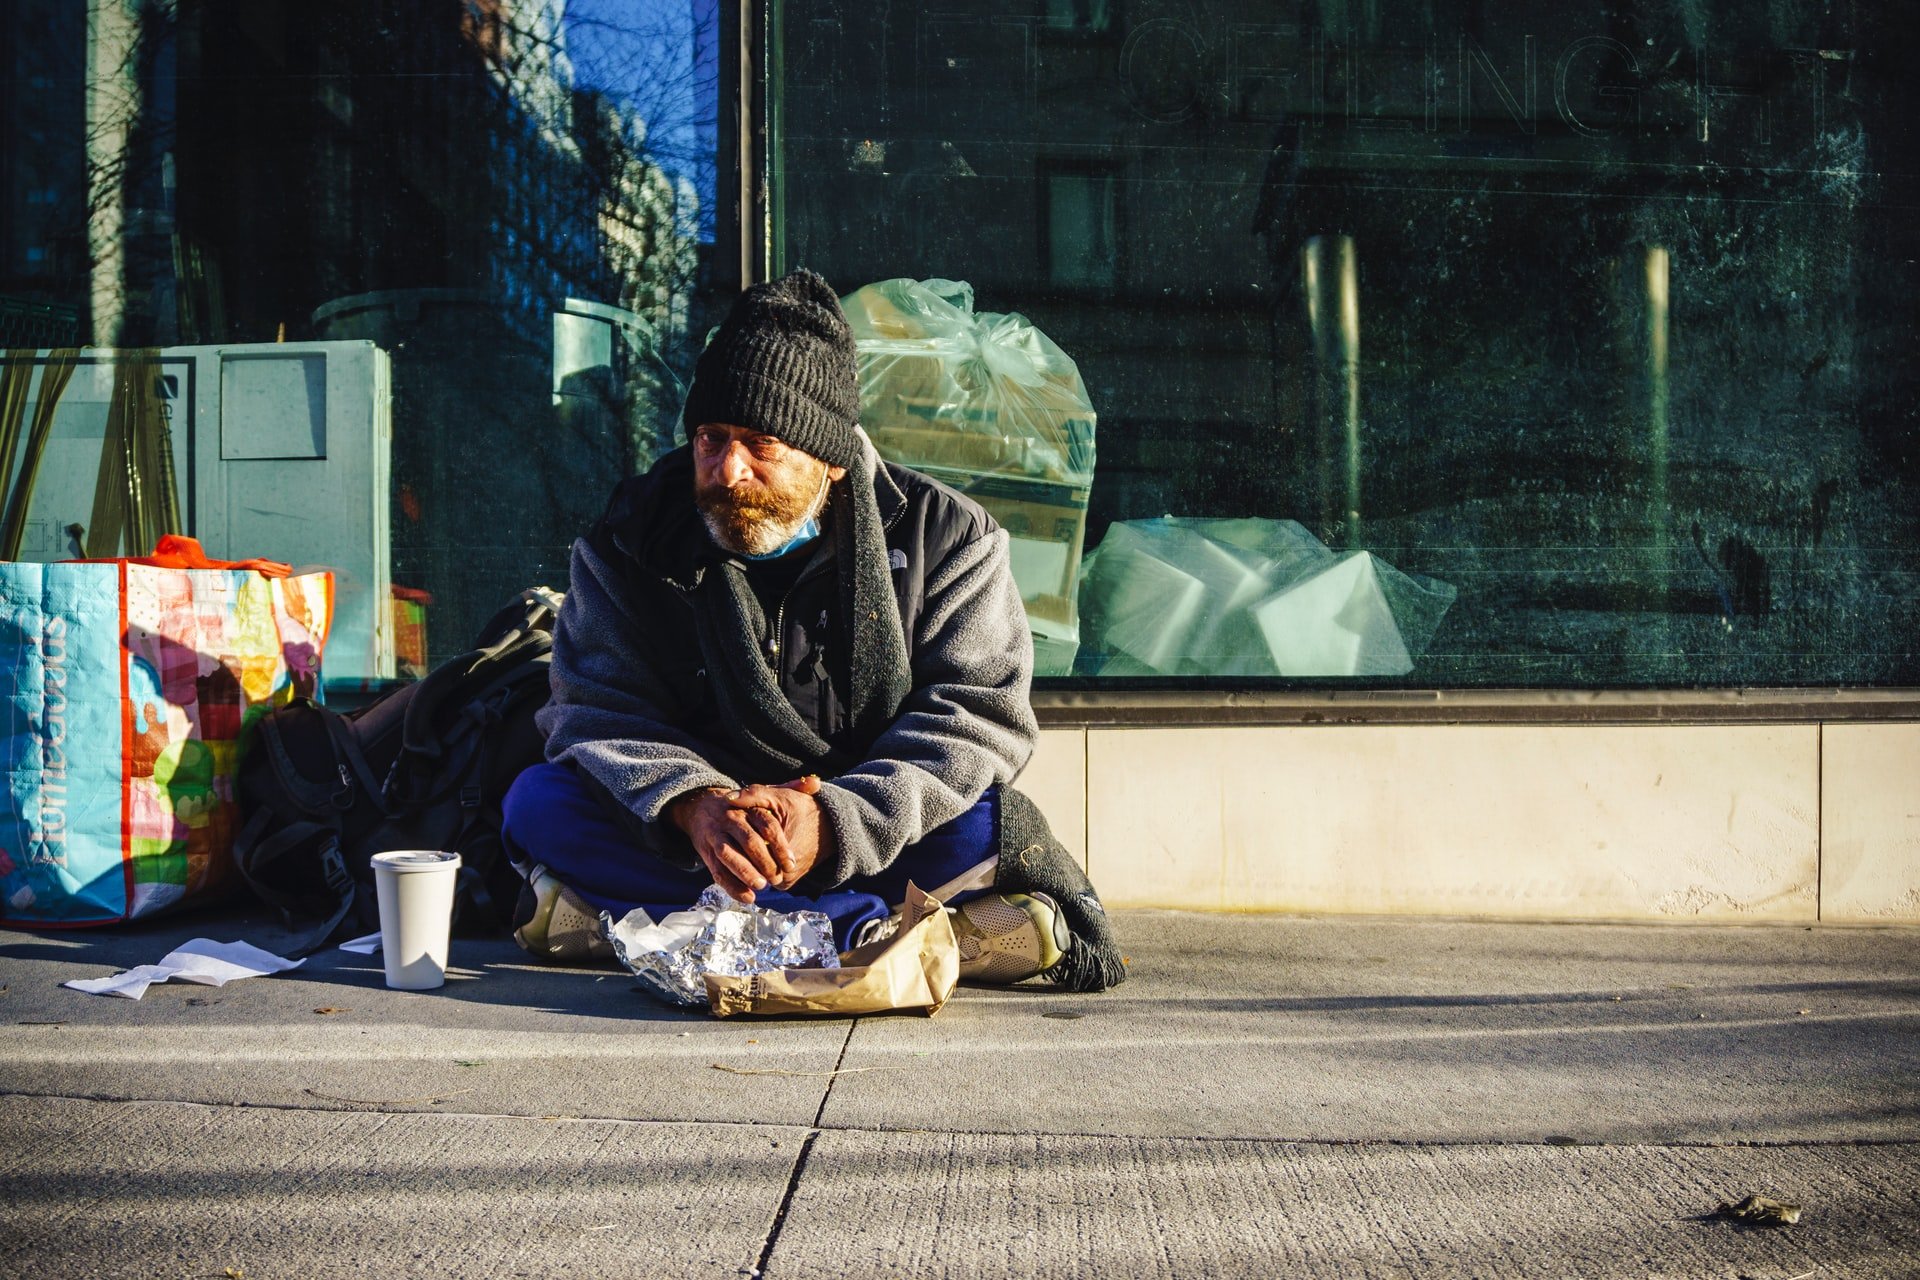 He was a homeless man | Source: Unsplash